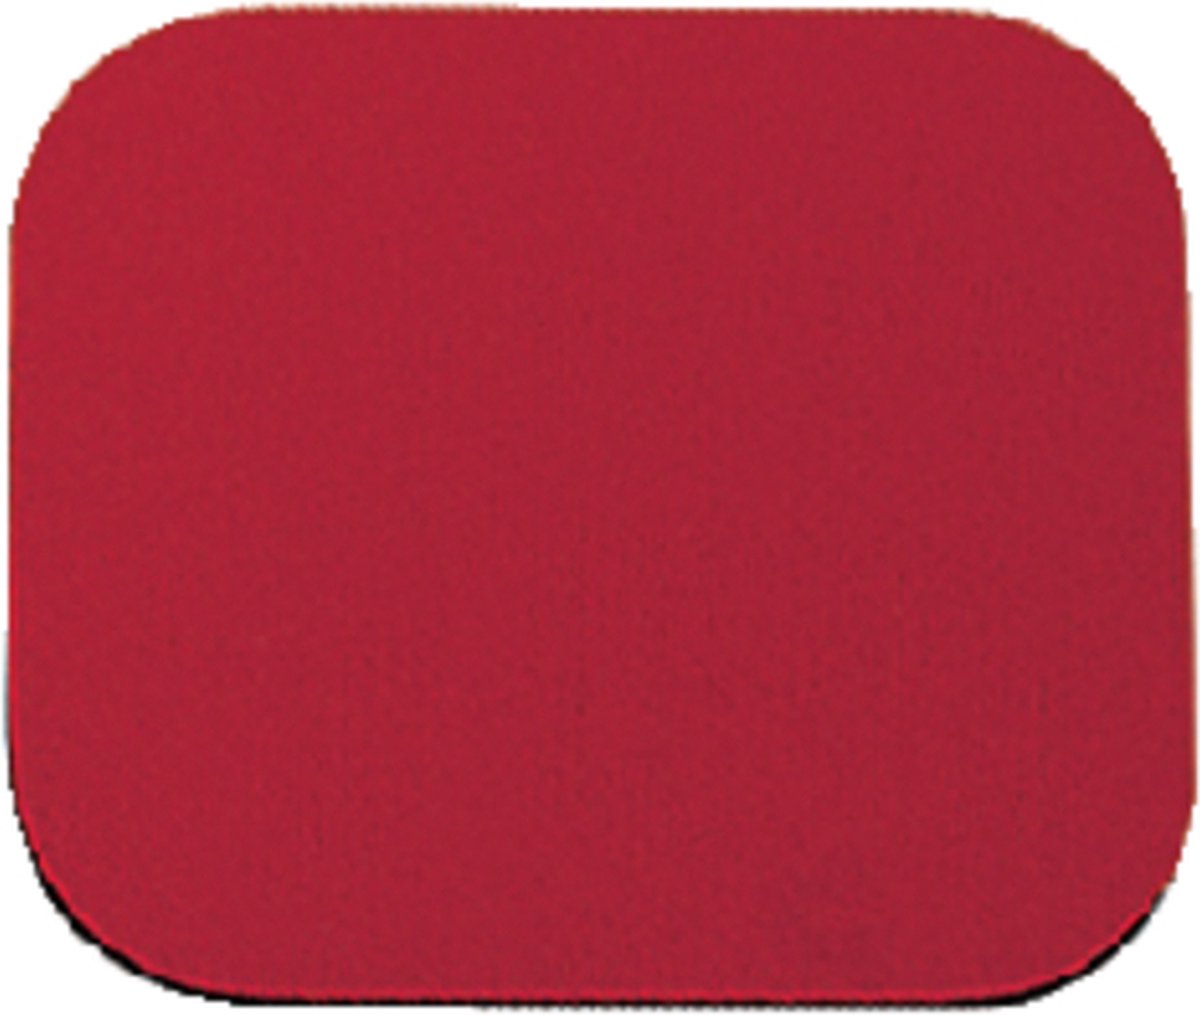 Muismat Quantore 230x190x6mm rood - Quantore